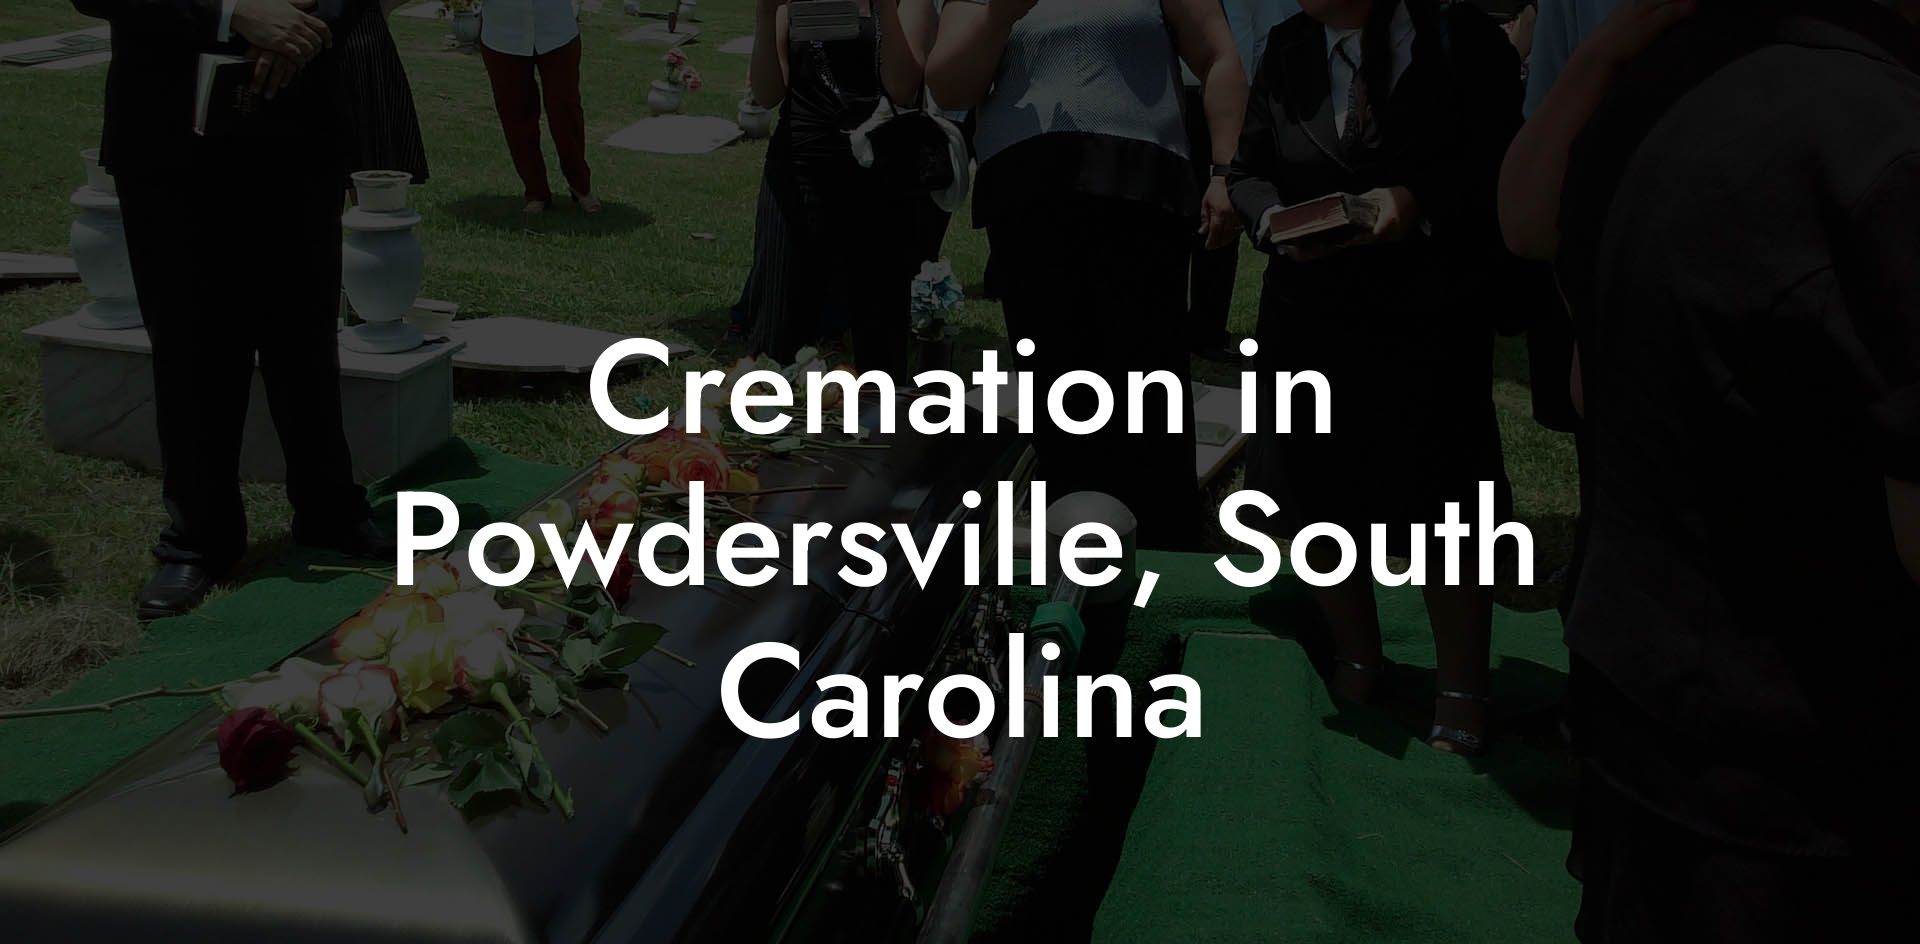 Cremation in Powdersville, South Carolina